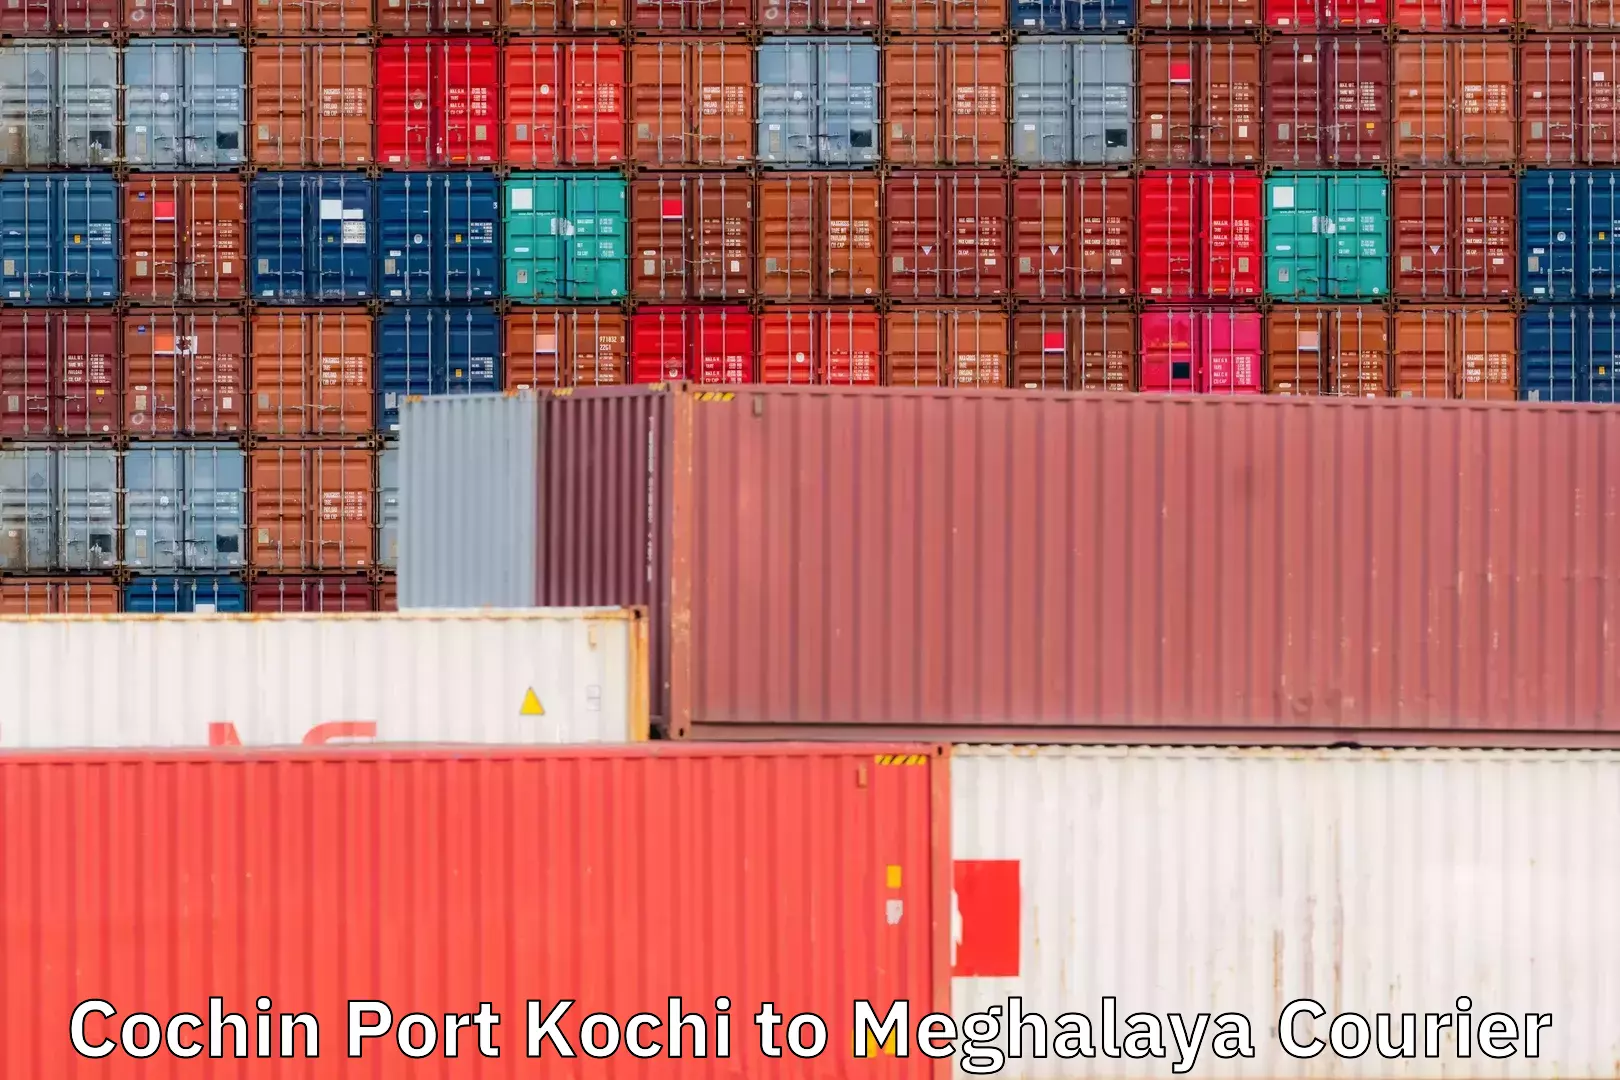 Courier service booking Cochin Port Kochi to Meghalaya